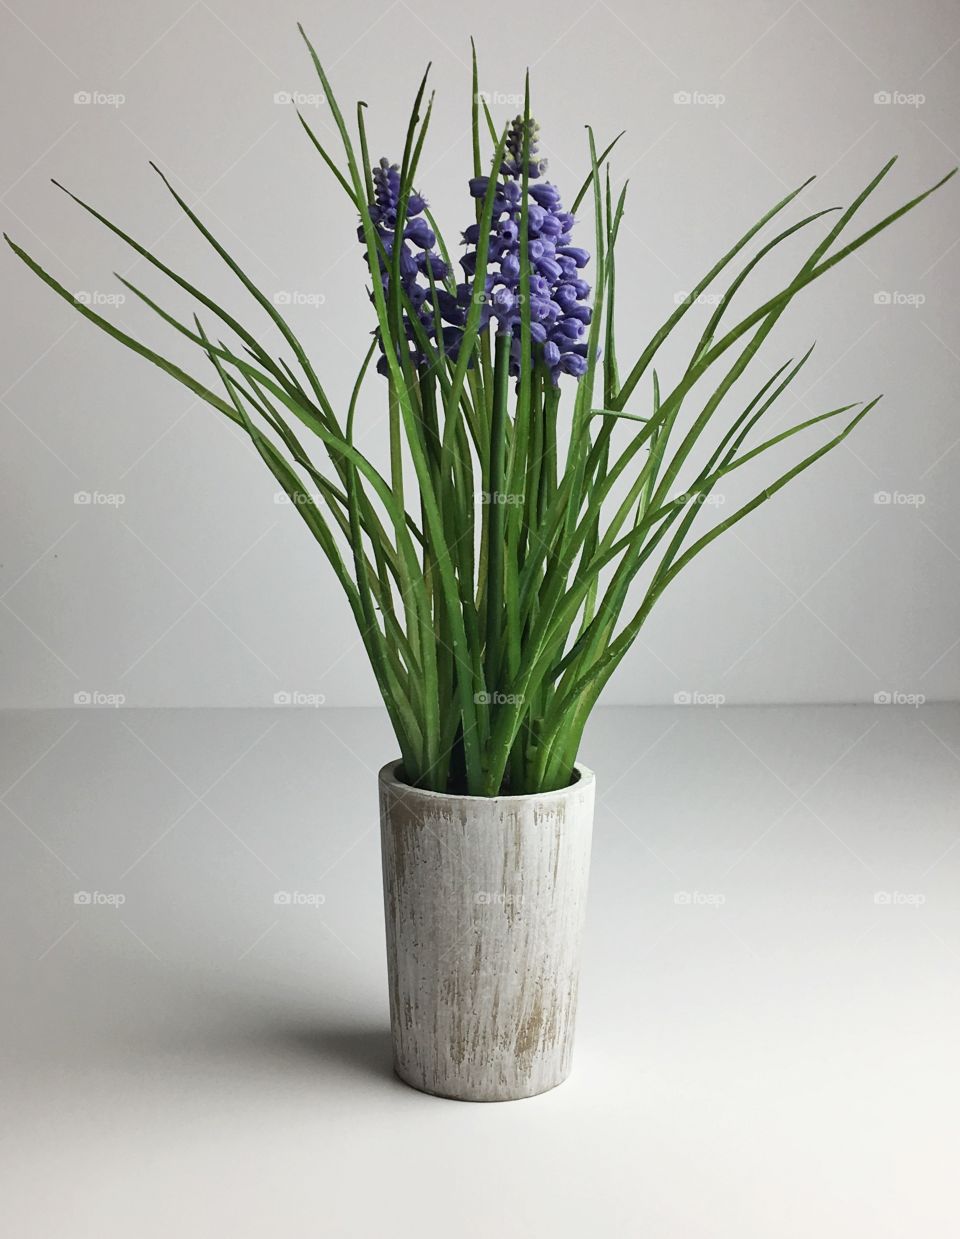 Lavender flowers in wooden pot